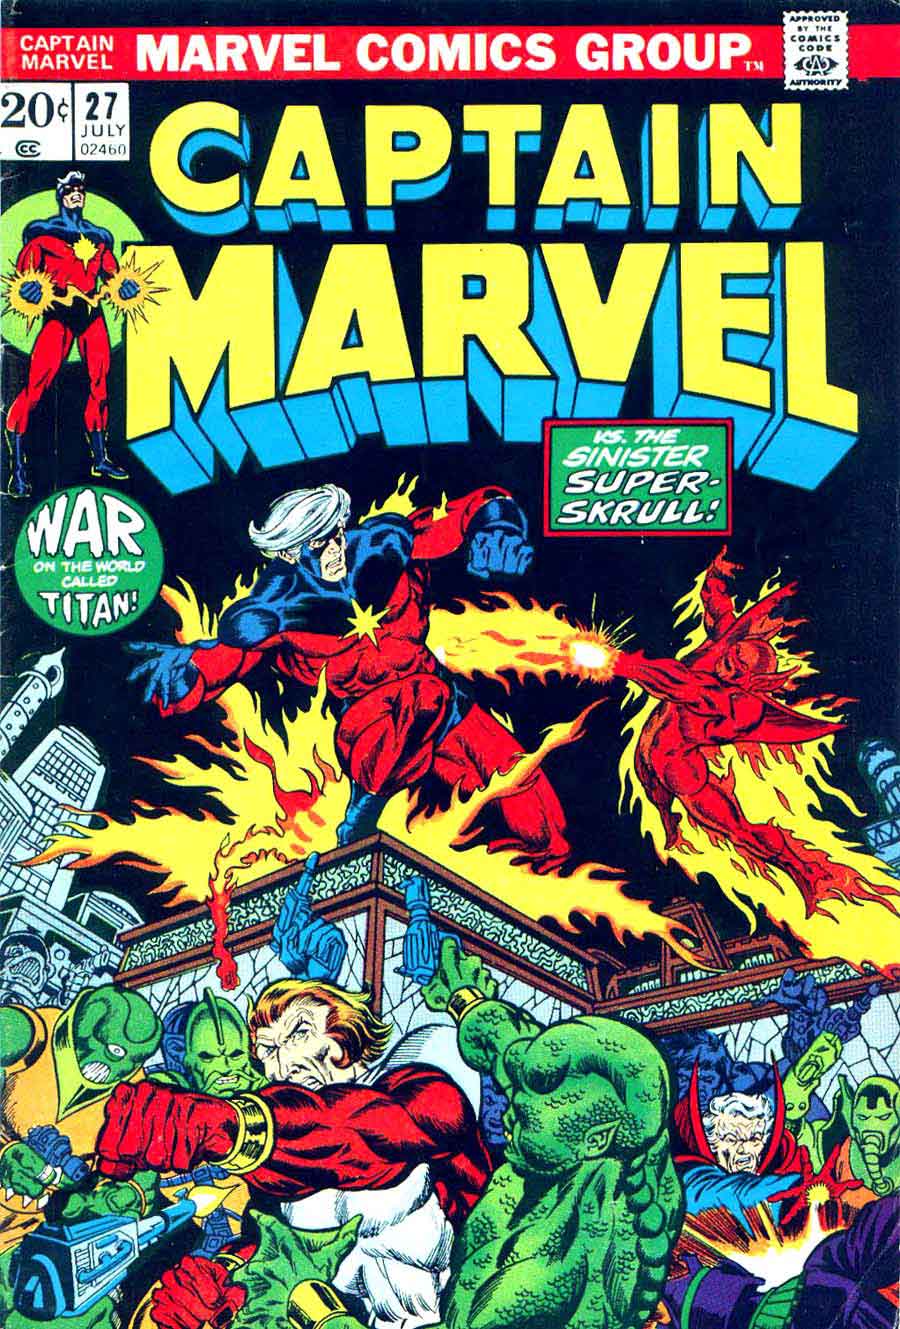 Captain Marvel #27 - Jim Starlin marvel key issue 1970s bronze age comic book cover - 1st appearance Eros Starfox